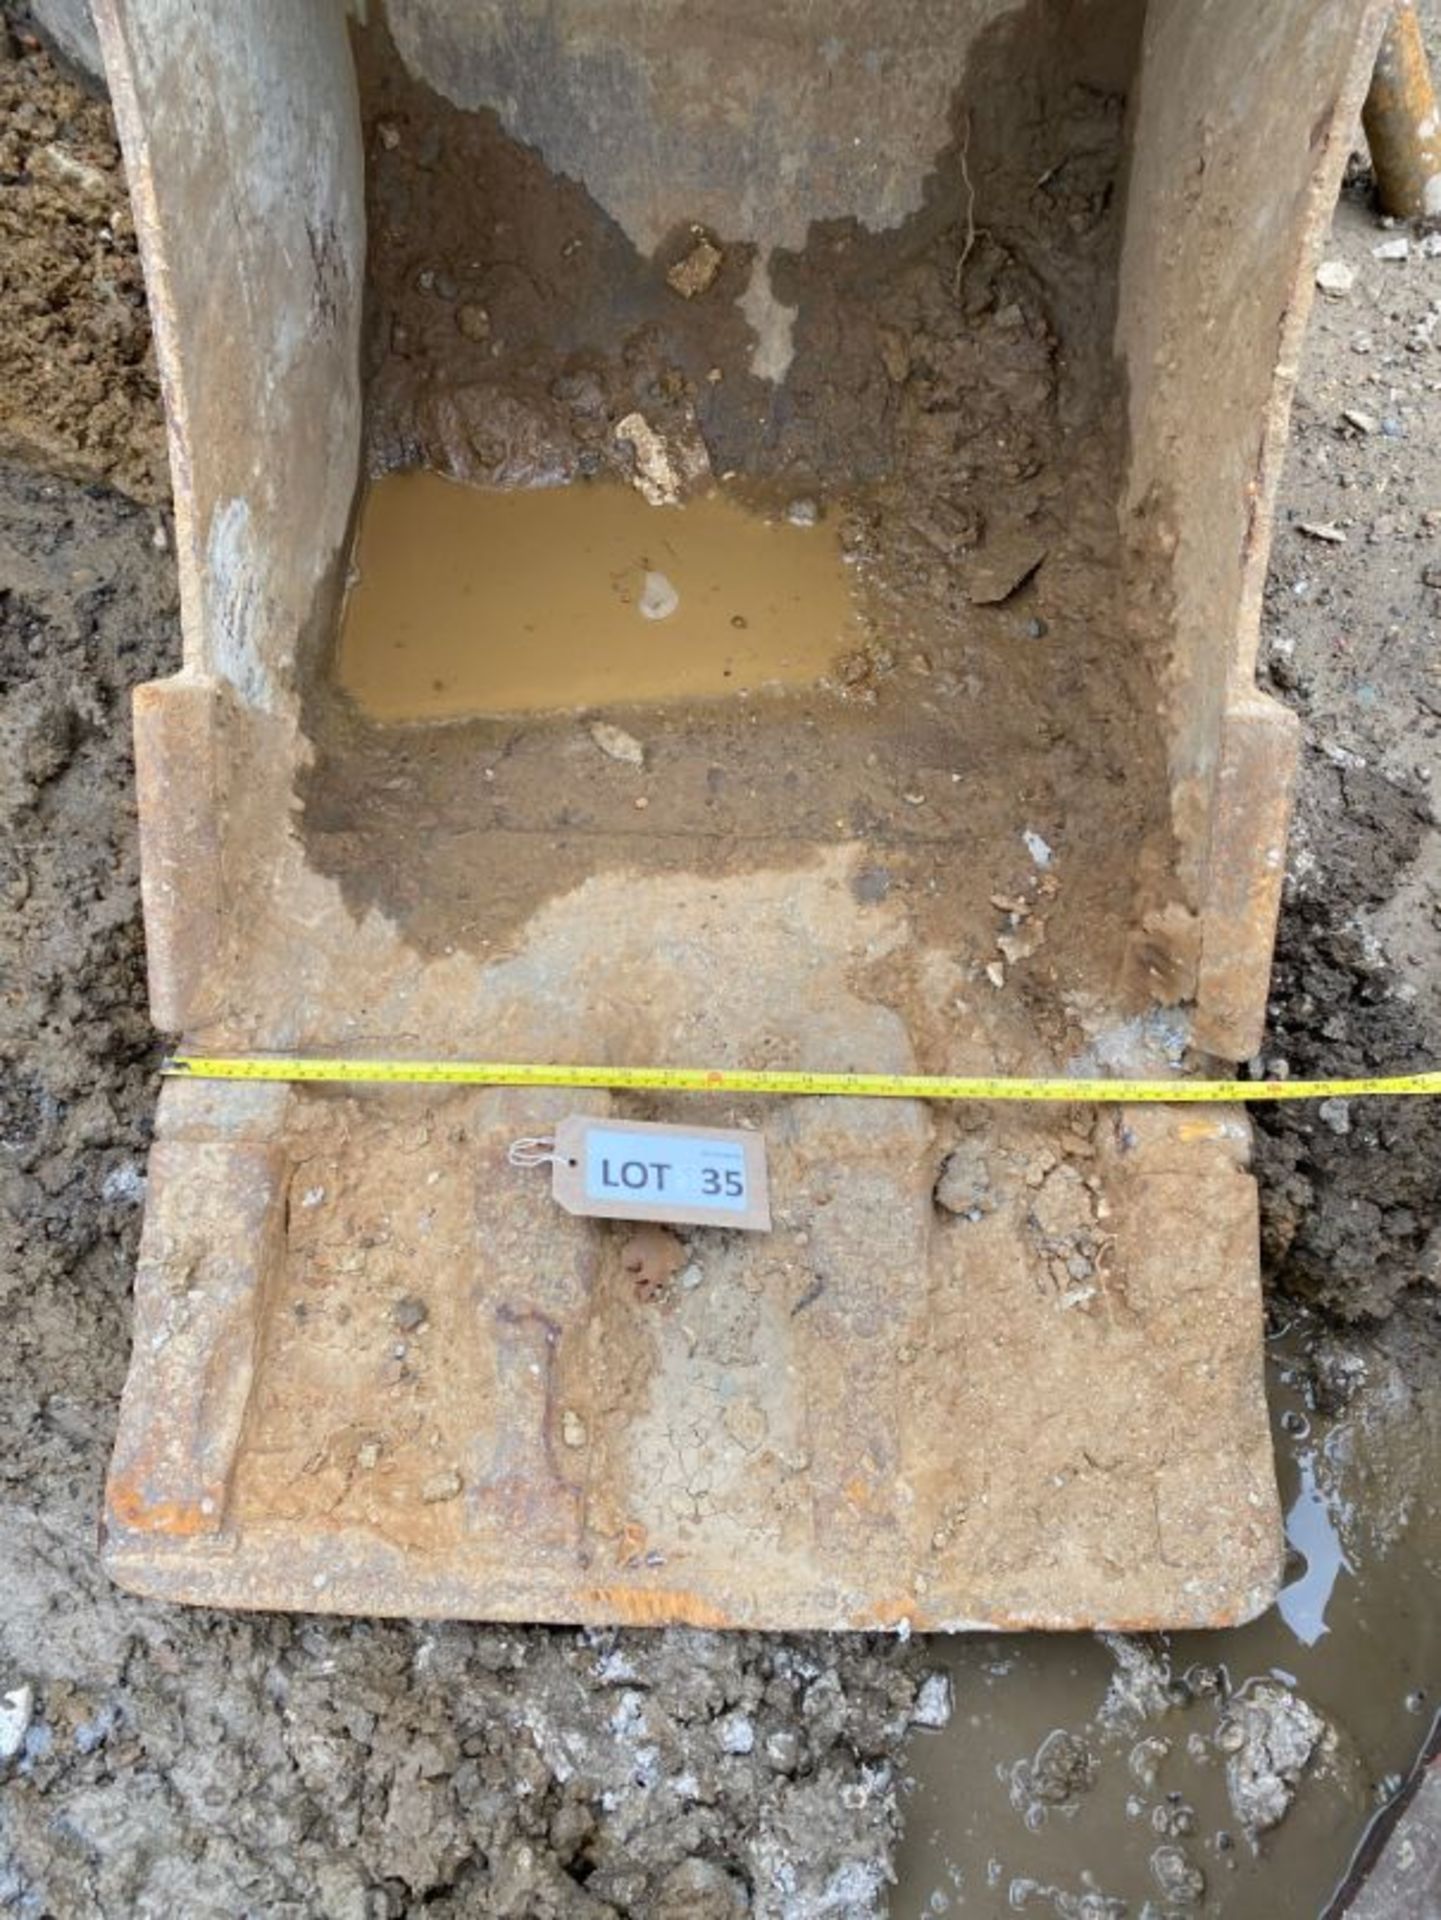 Strickland 24" excavator bucket (no age ID): 2" dia pin x 8" dipper x 12" between centres